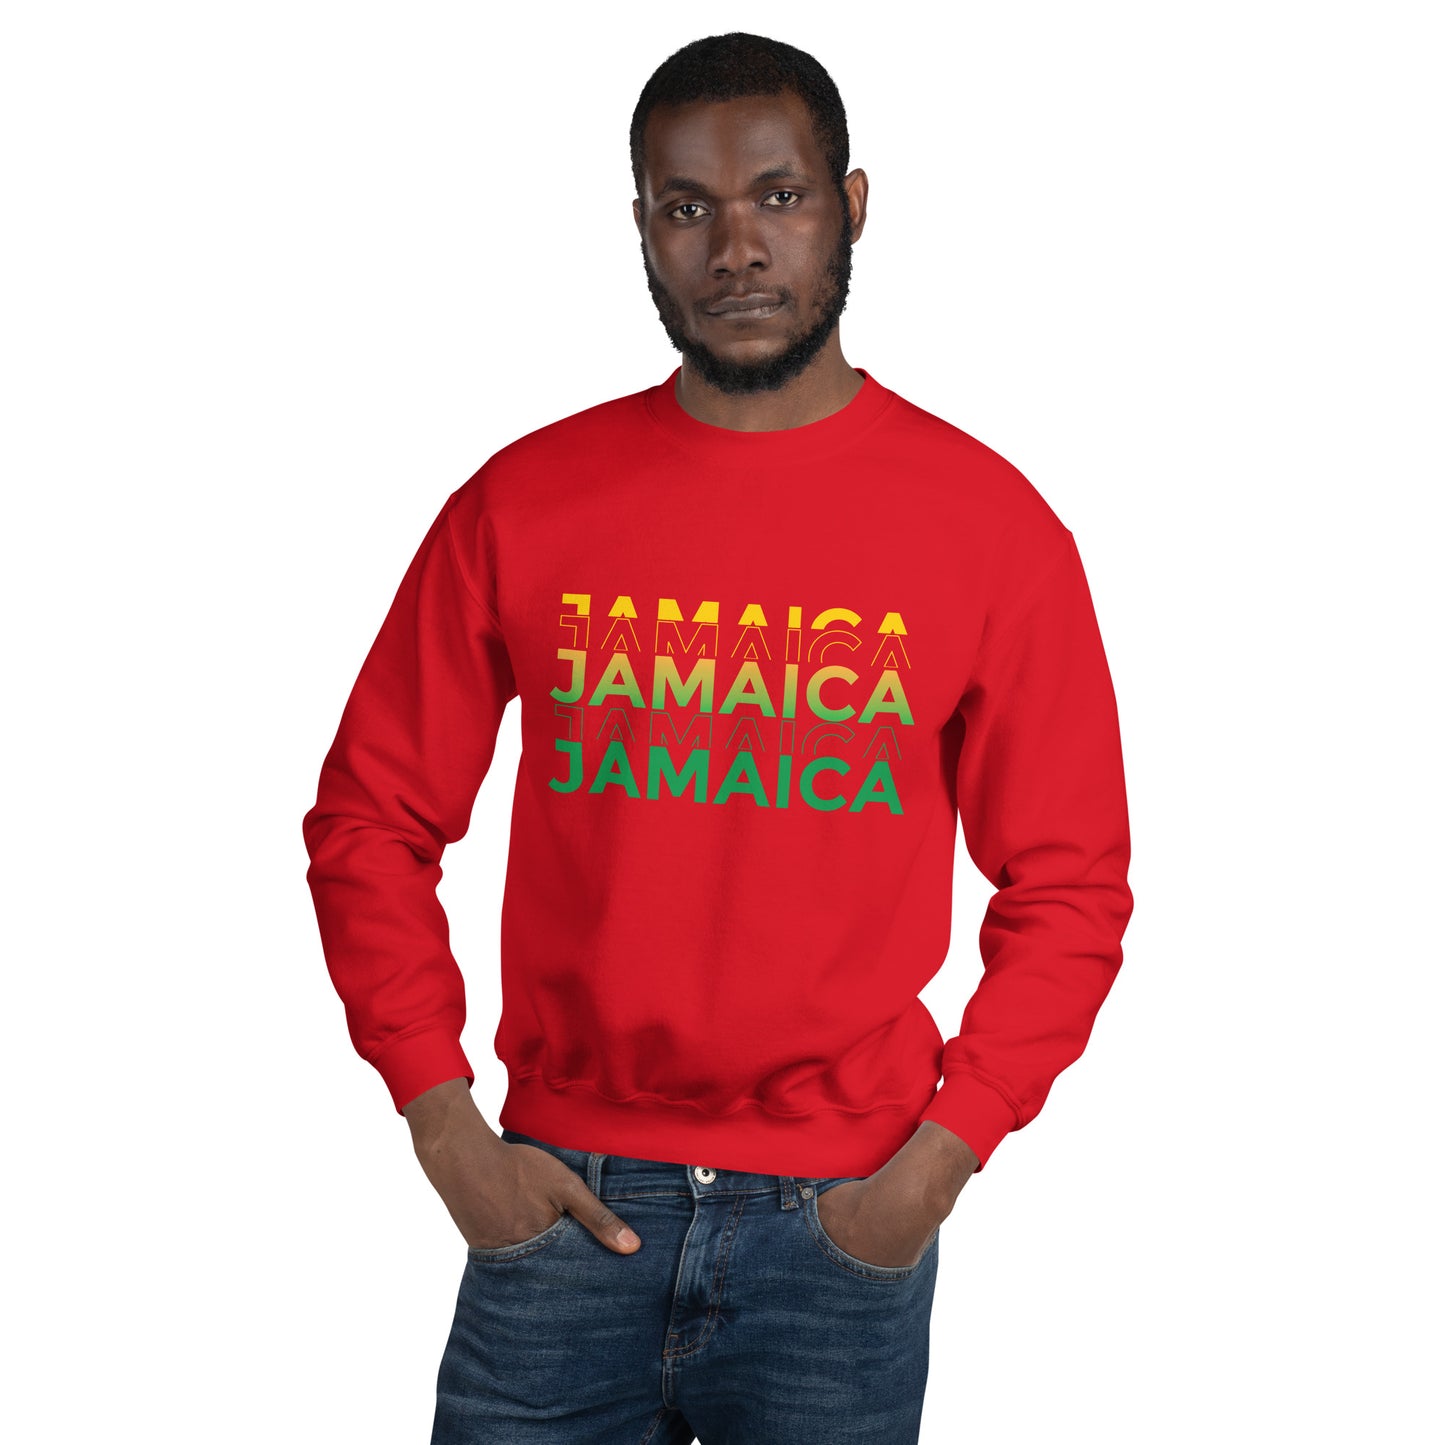 Unisex "Jamaica" Sweatshirt